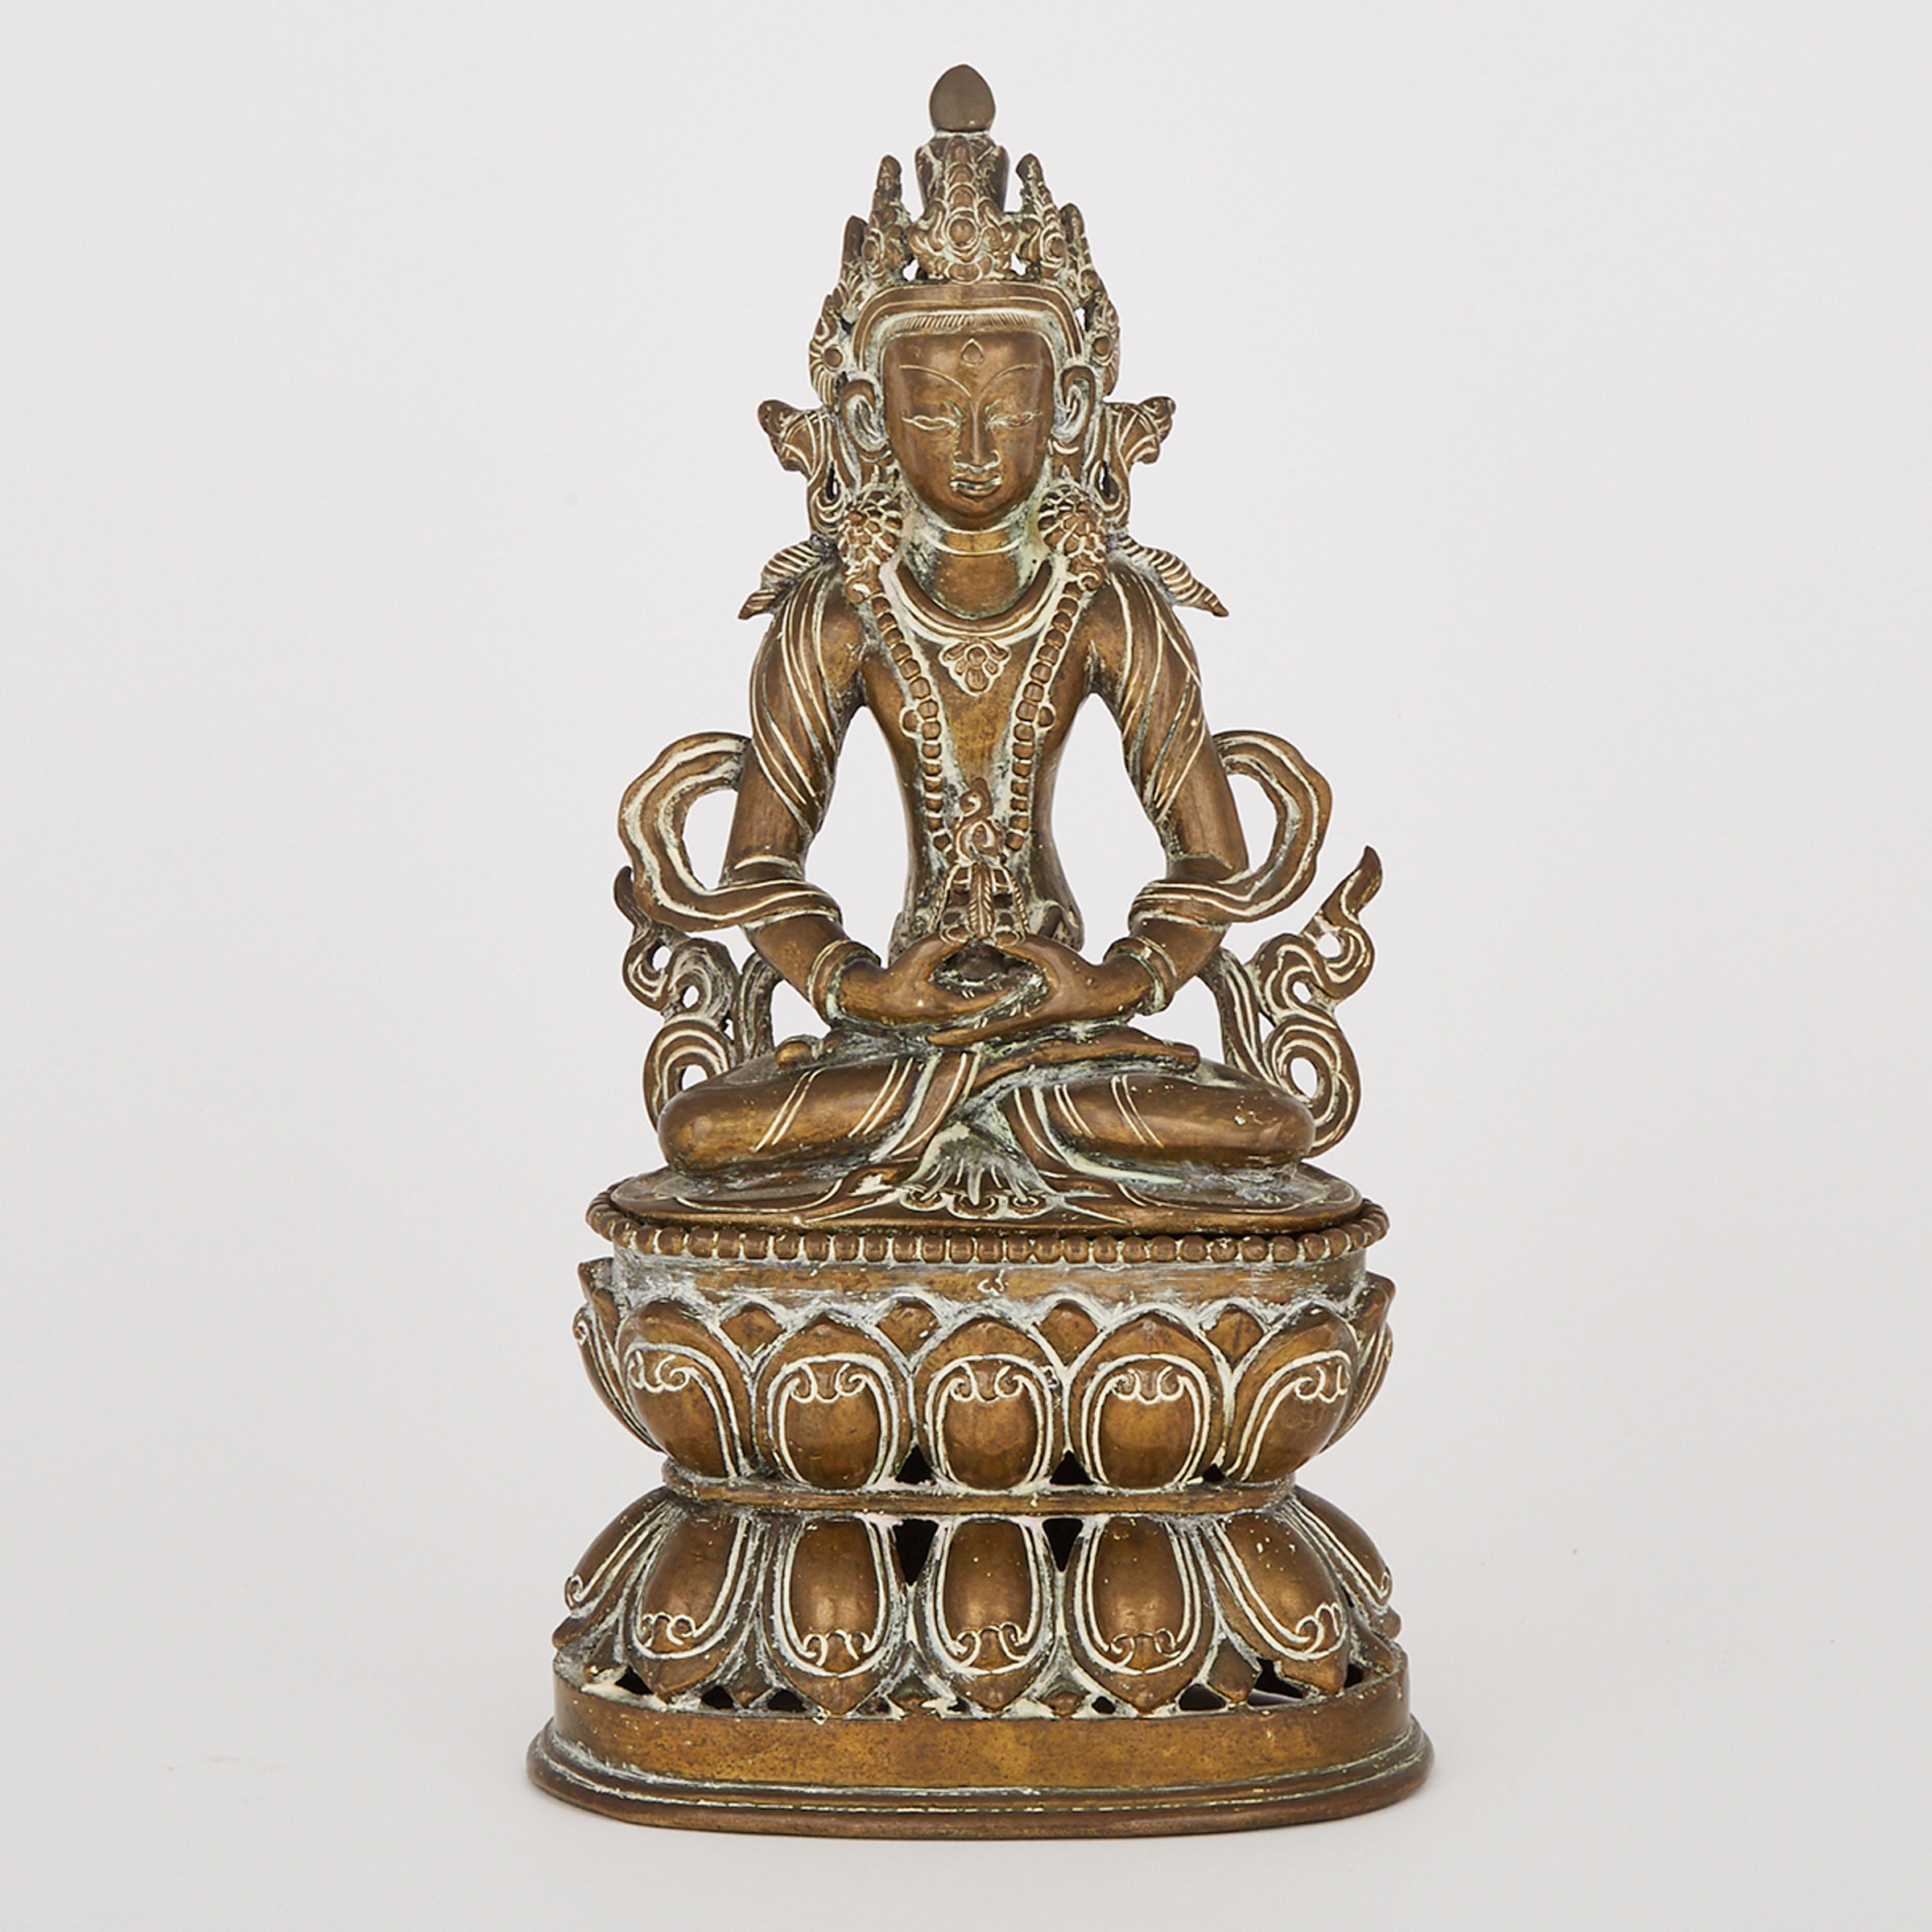 A Bronze Figure of Amitabha Buddha, Tibet, 19th Century or Earlier